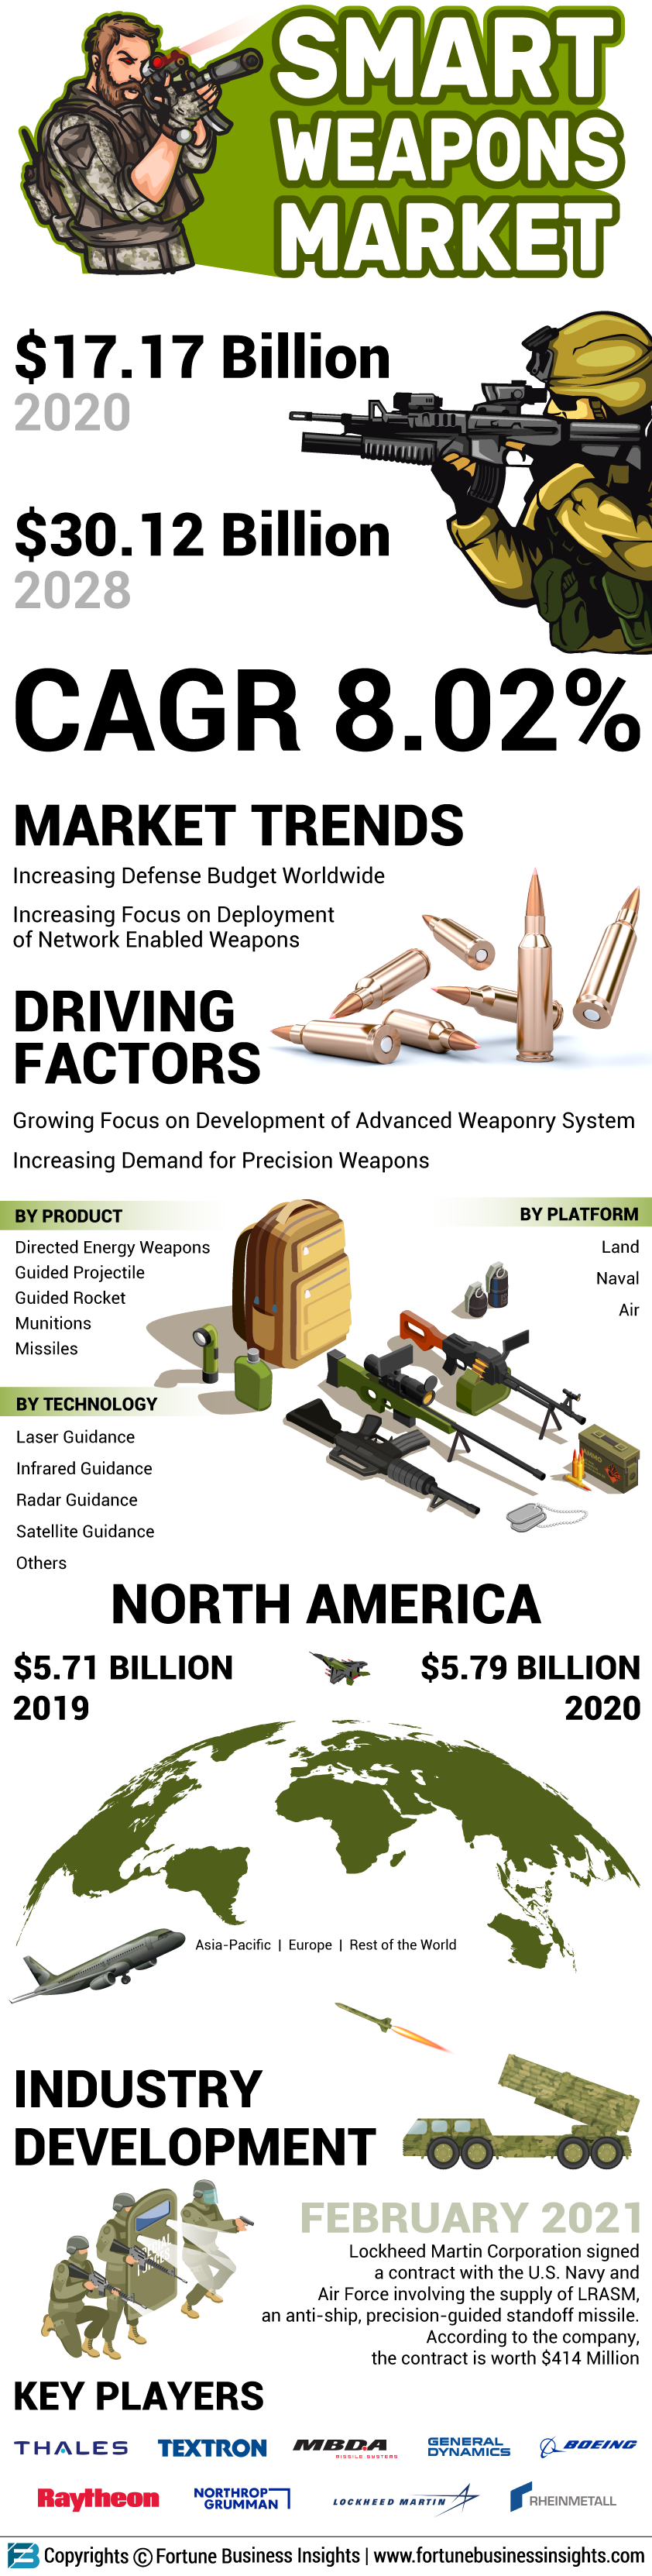 Smart Weapons Market